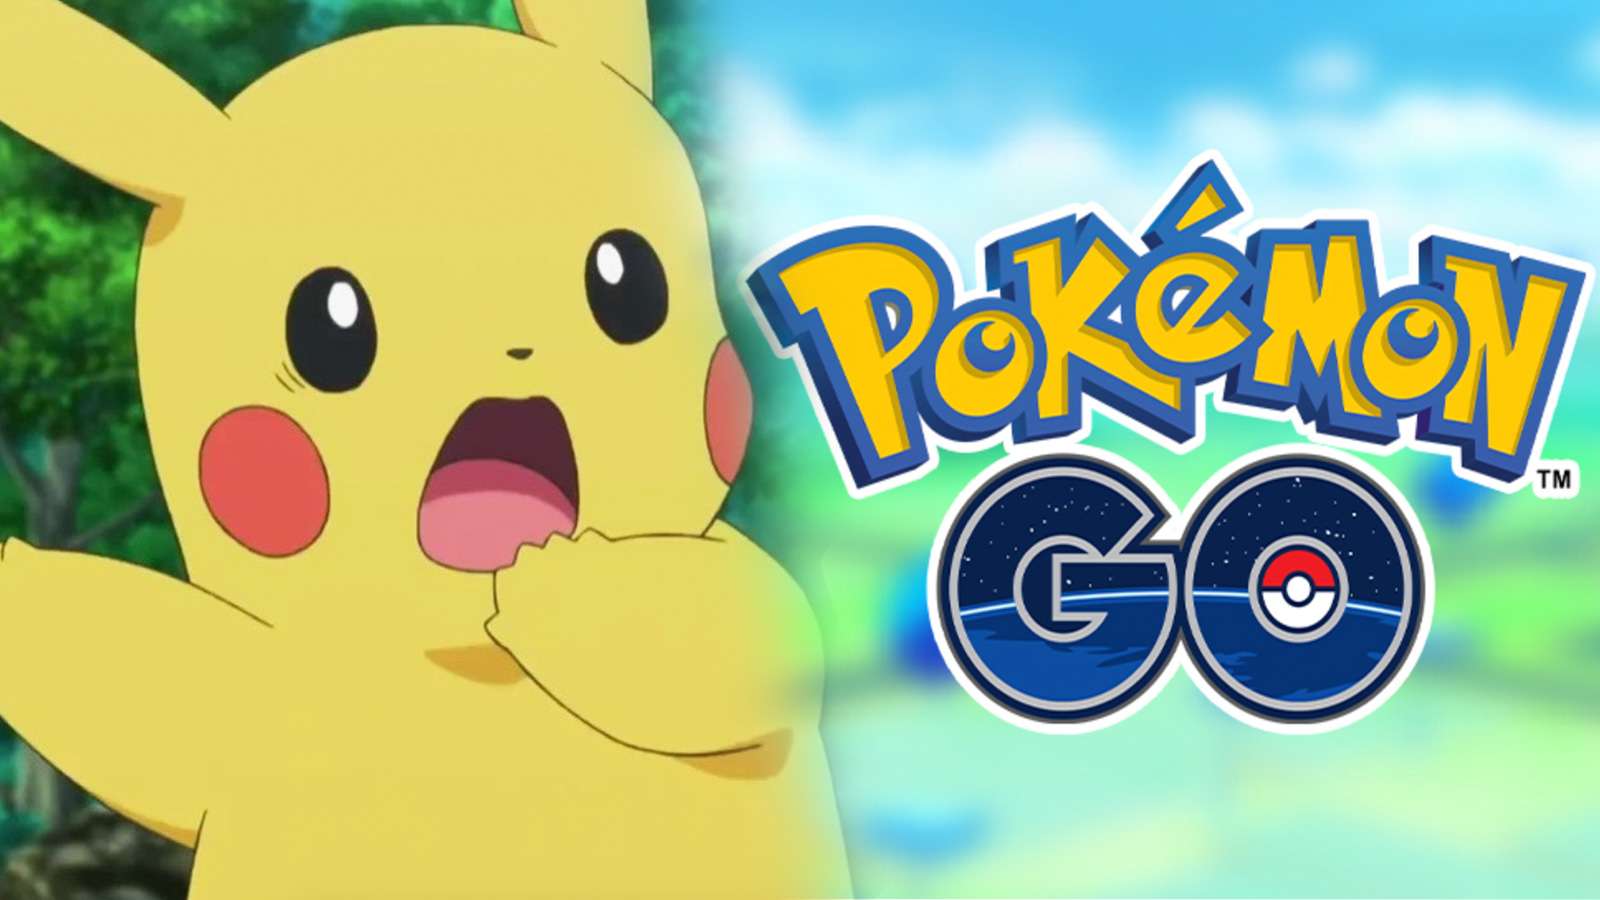 Screenshot of scared Pikachu from Pokemon anime next to Go logo.